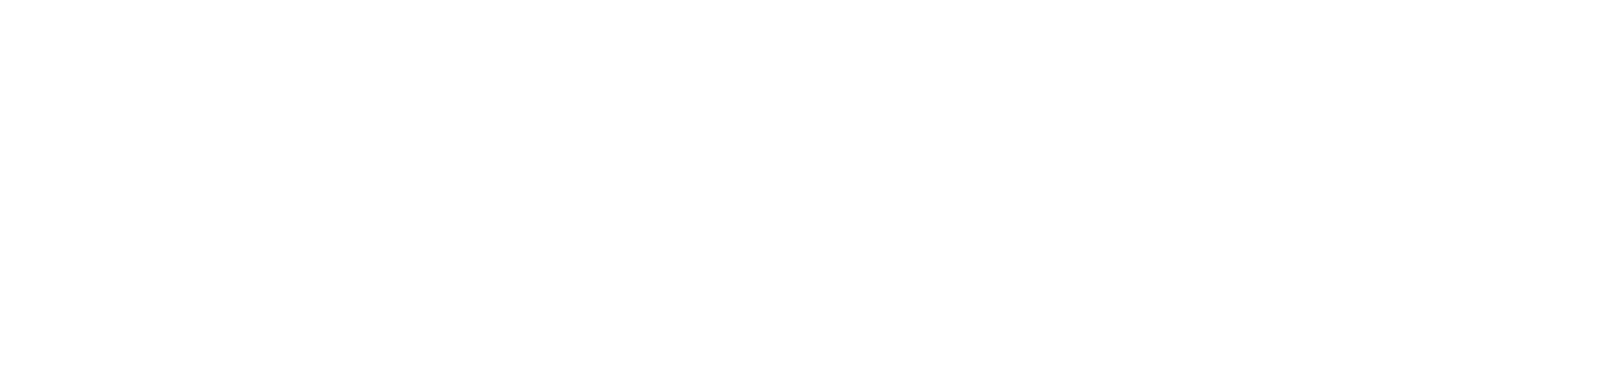 Excelsior University Logo in black